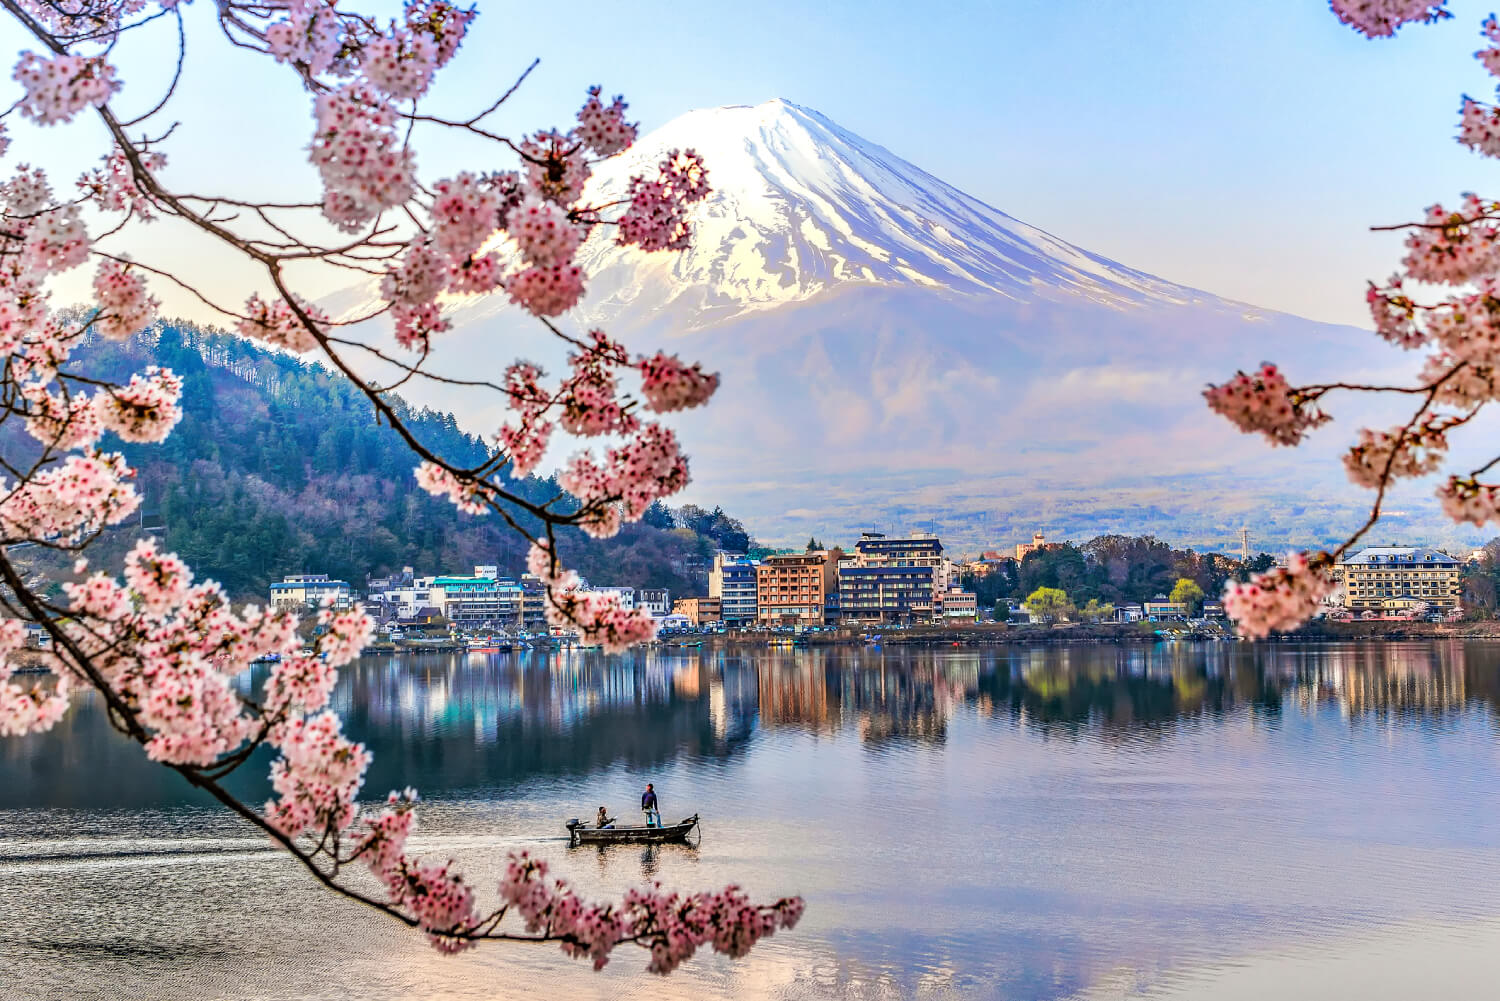 Landscape Of Kawaguchiko Lake and Sakura with Fuji Mountain, Japan